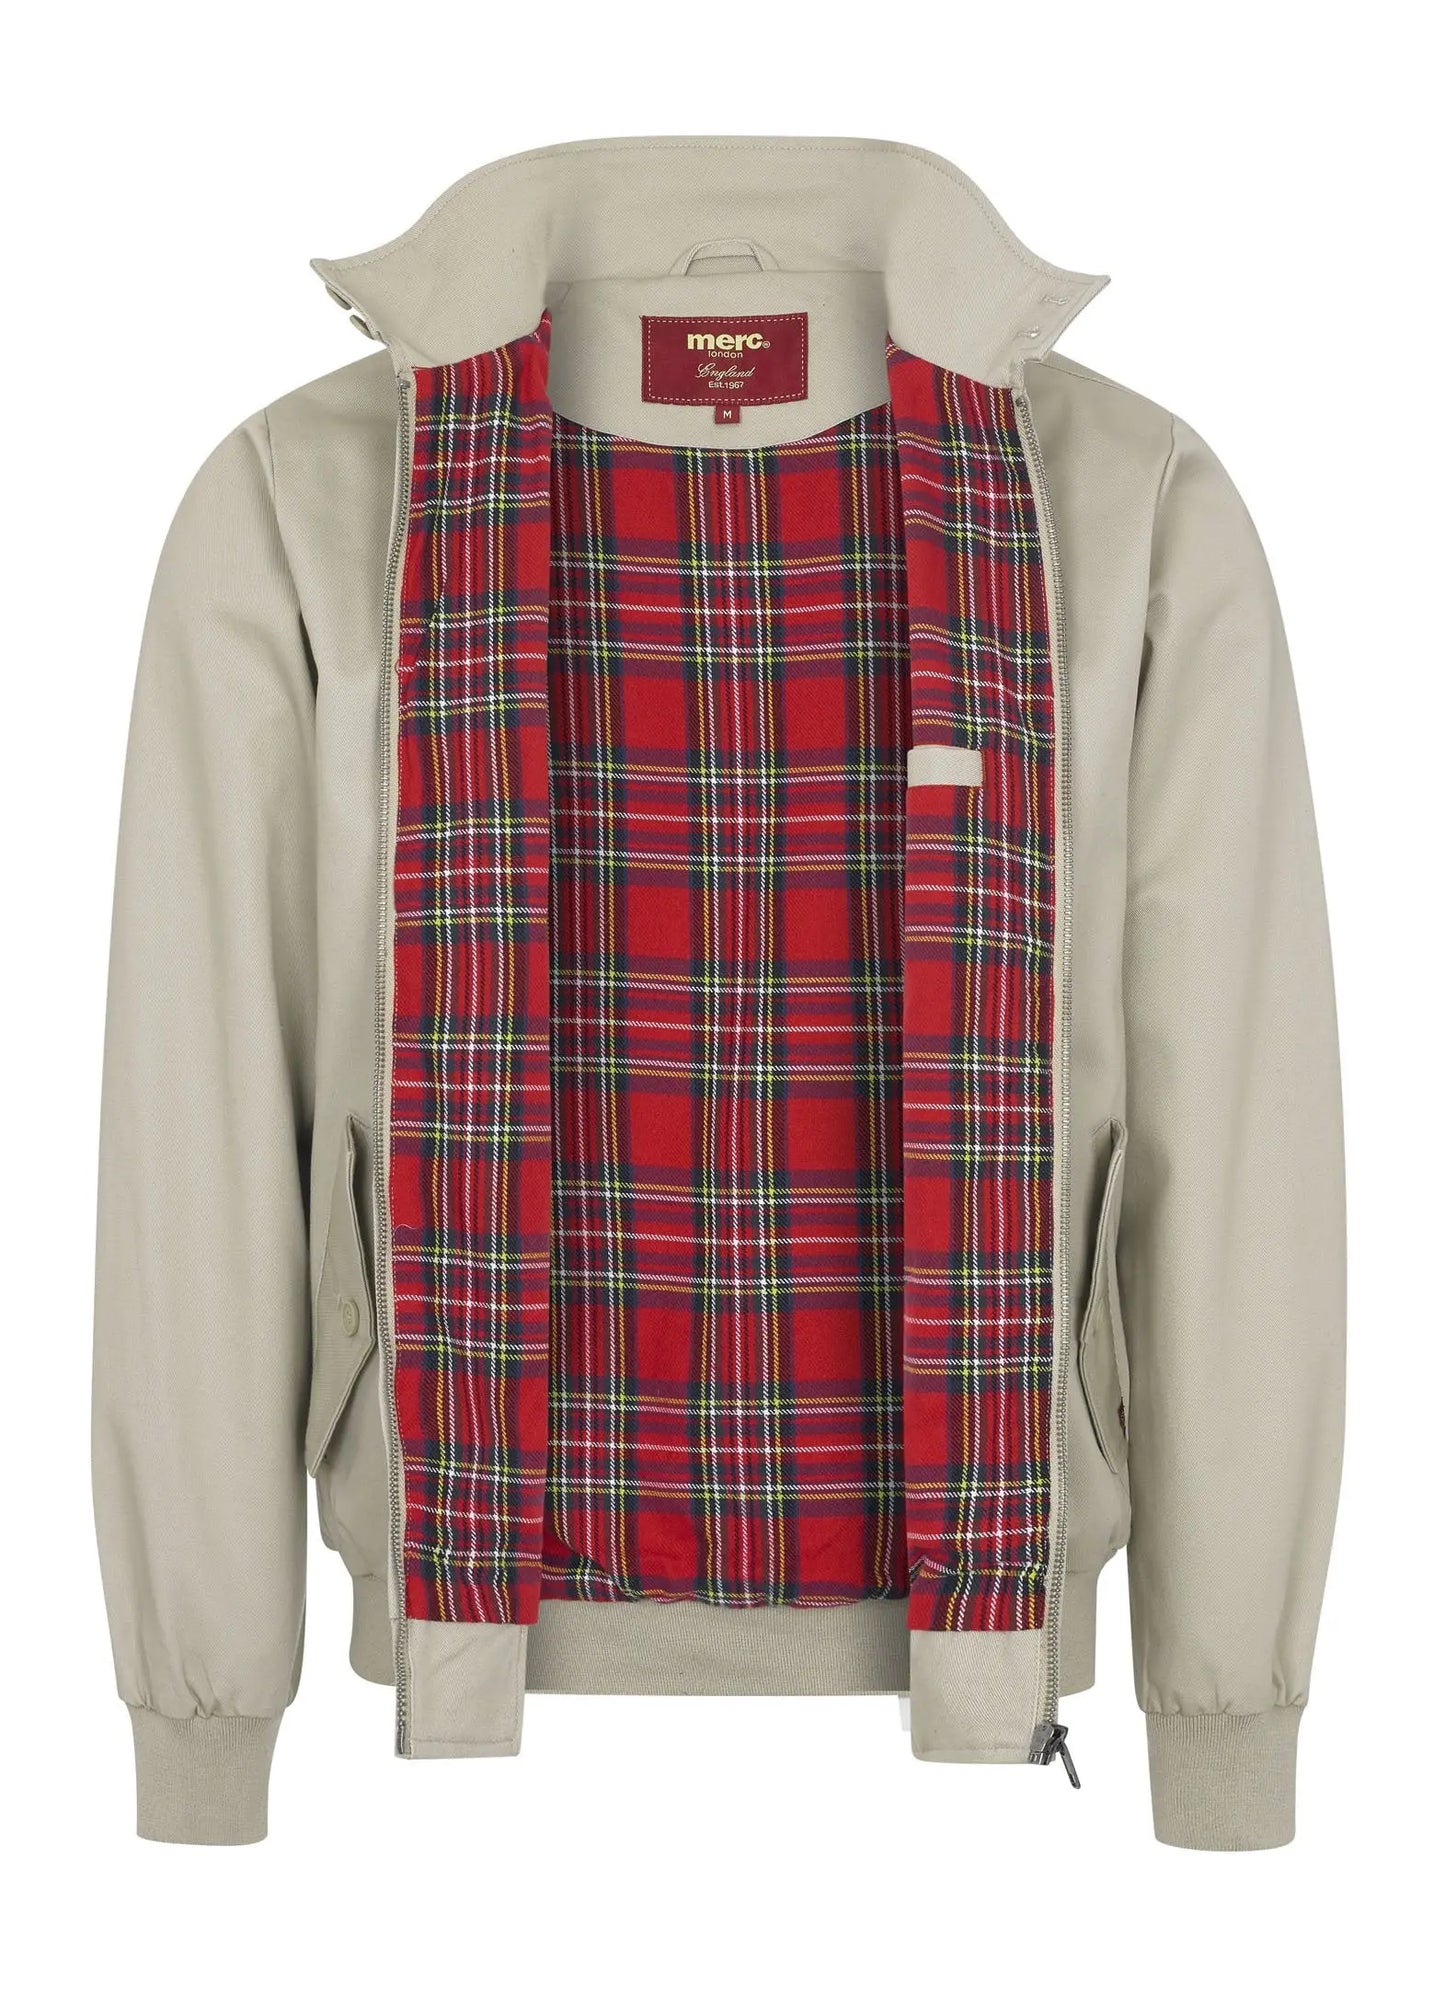 Merc London Harrington Cotton Jacket - Beige From Woven Durham